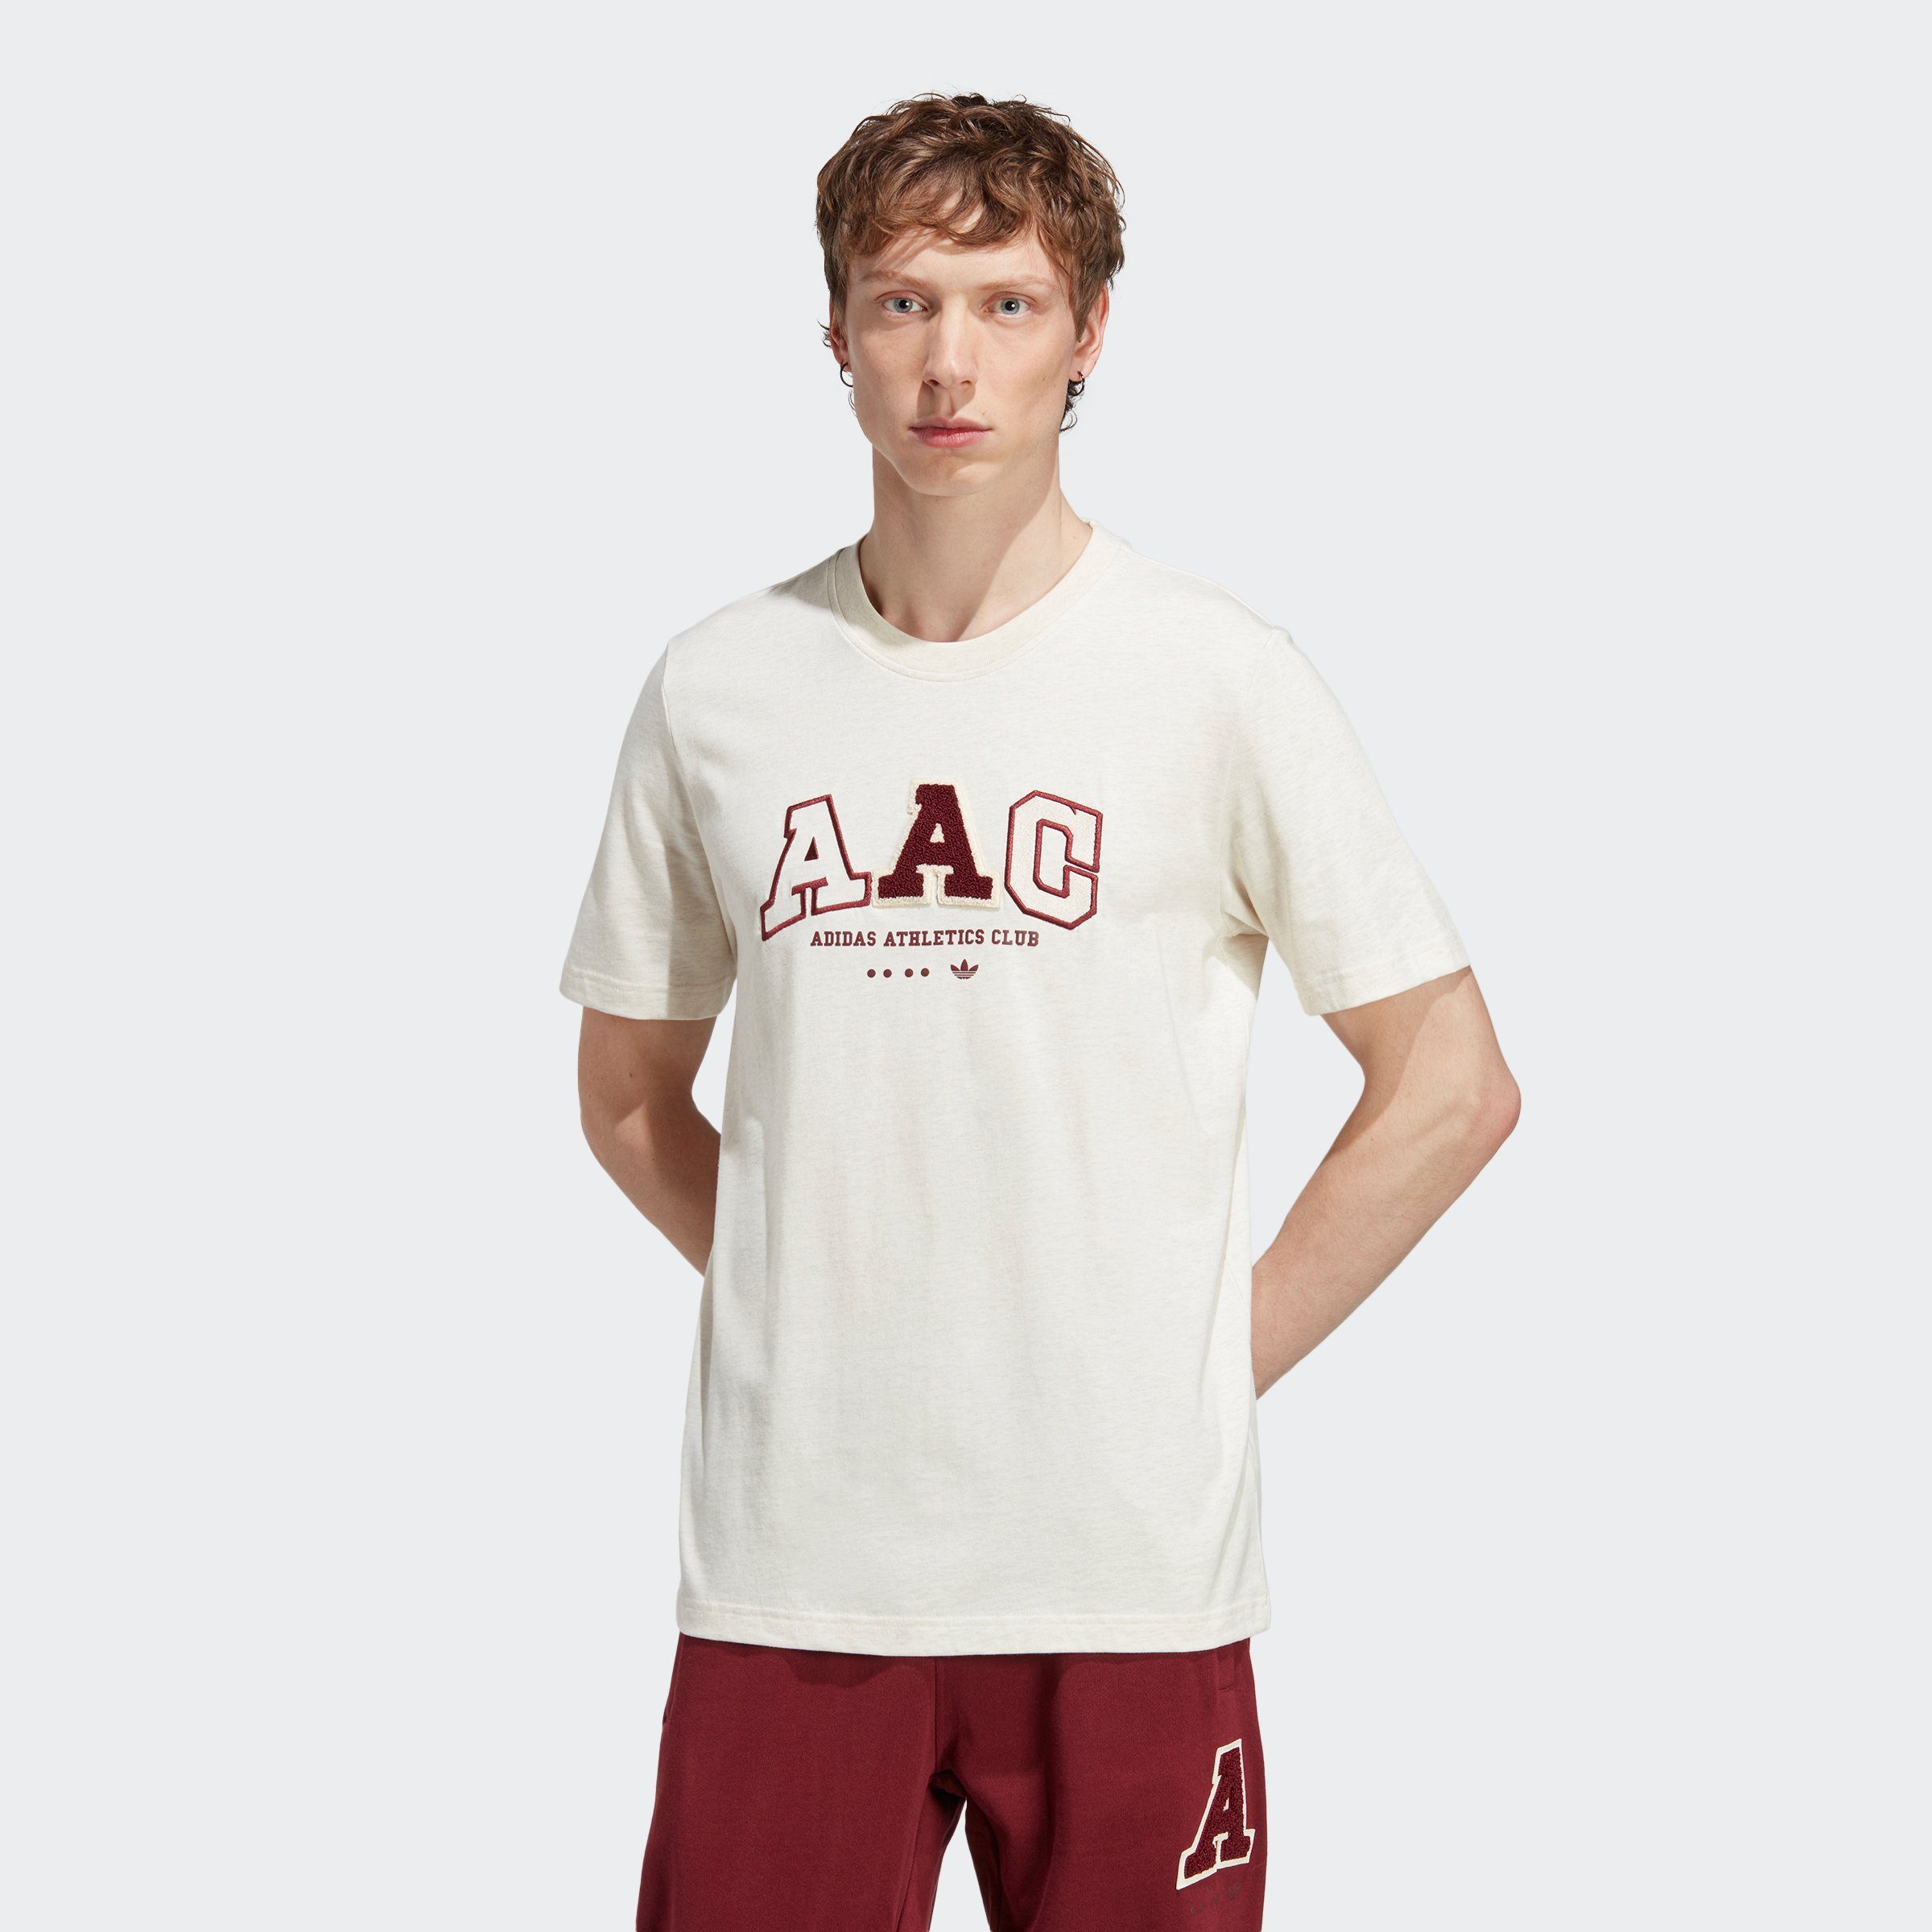 ADIDAS Originals T-Shirt AAC METRO Wonder adidas RIFTA White